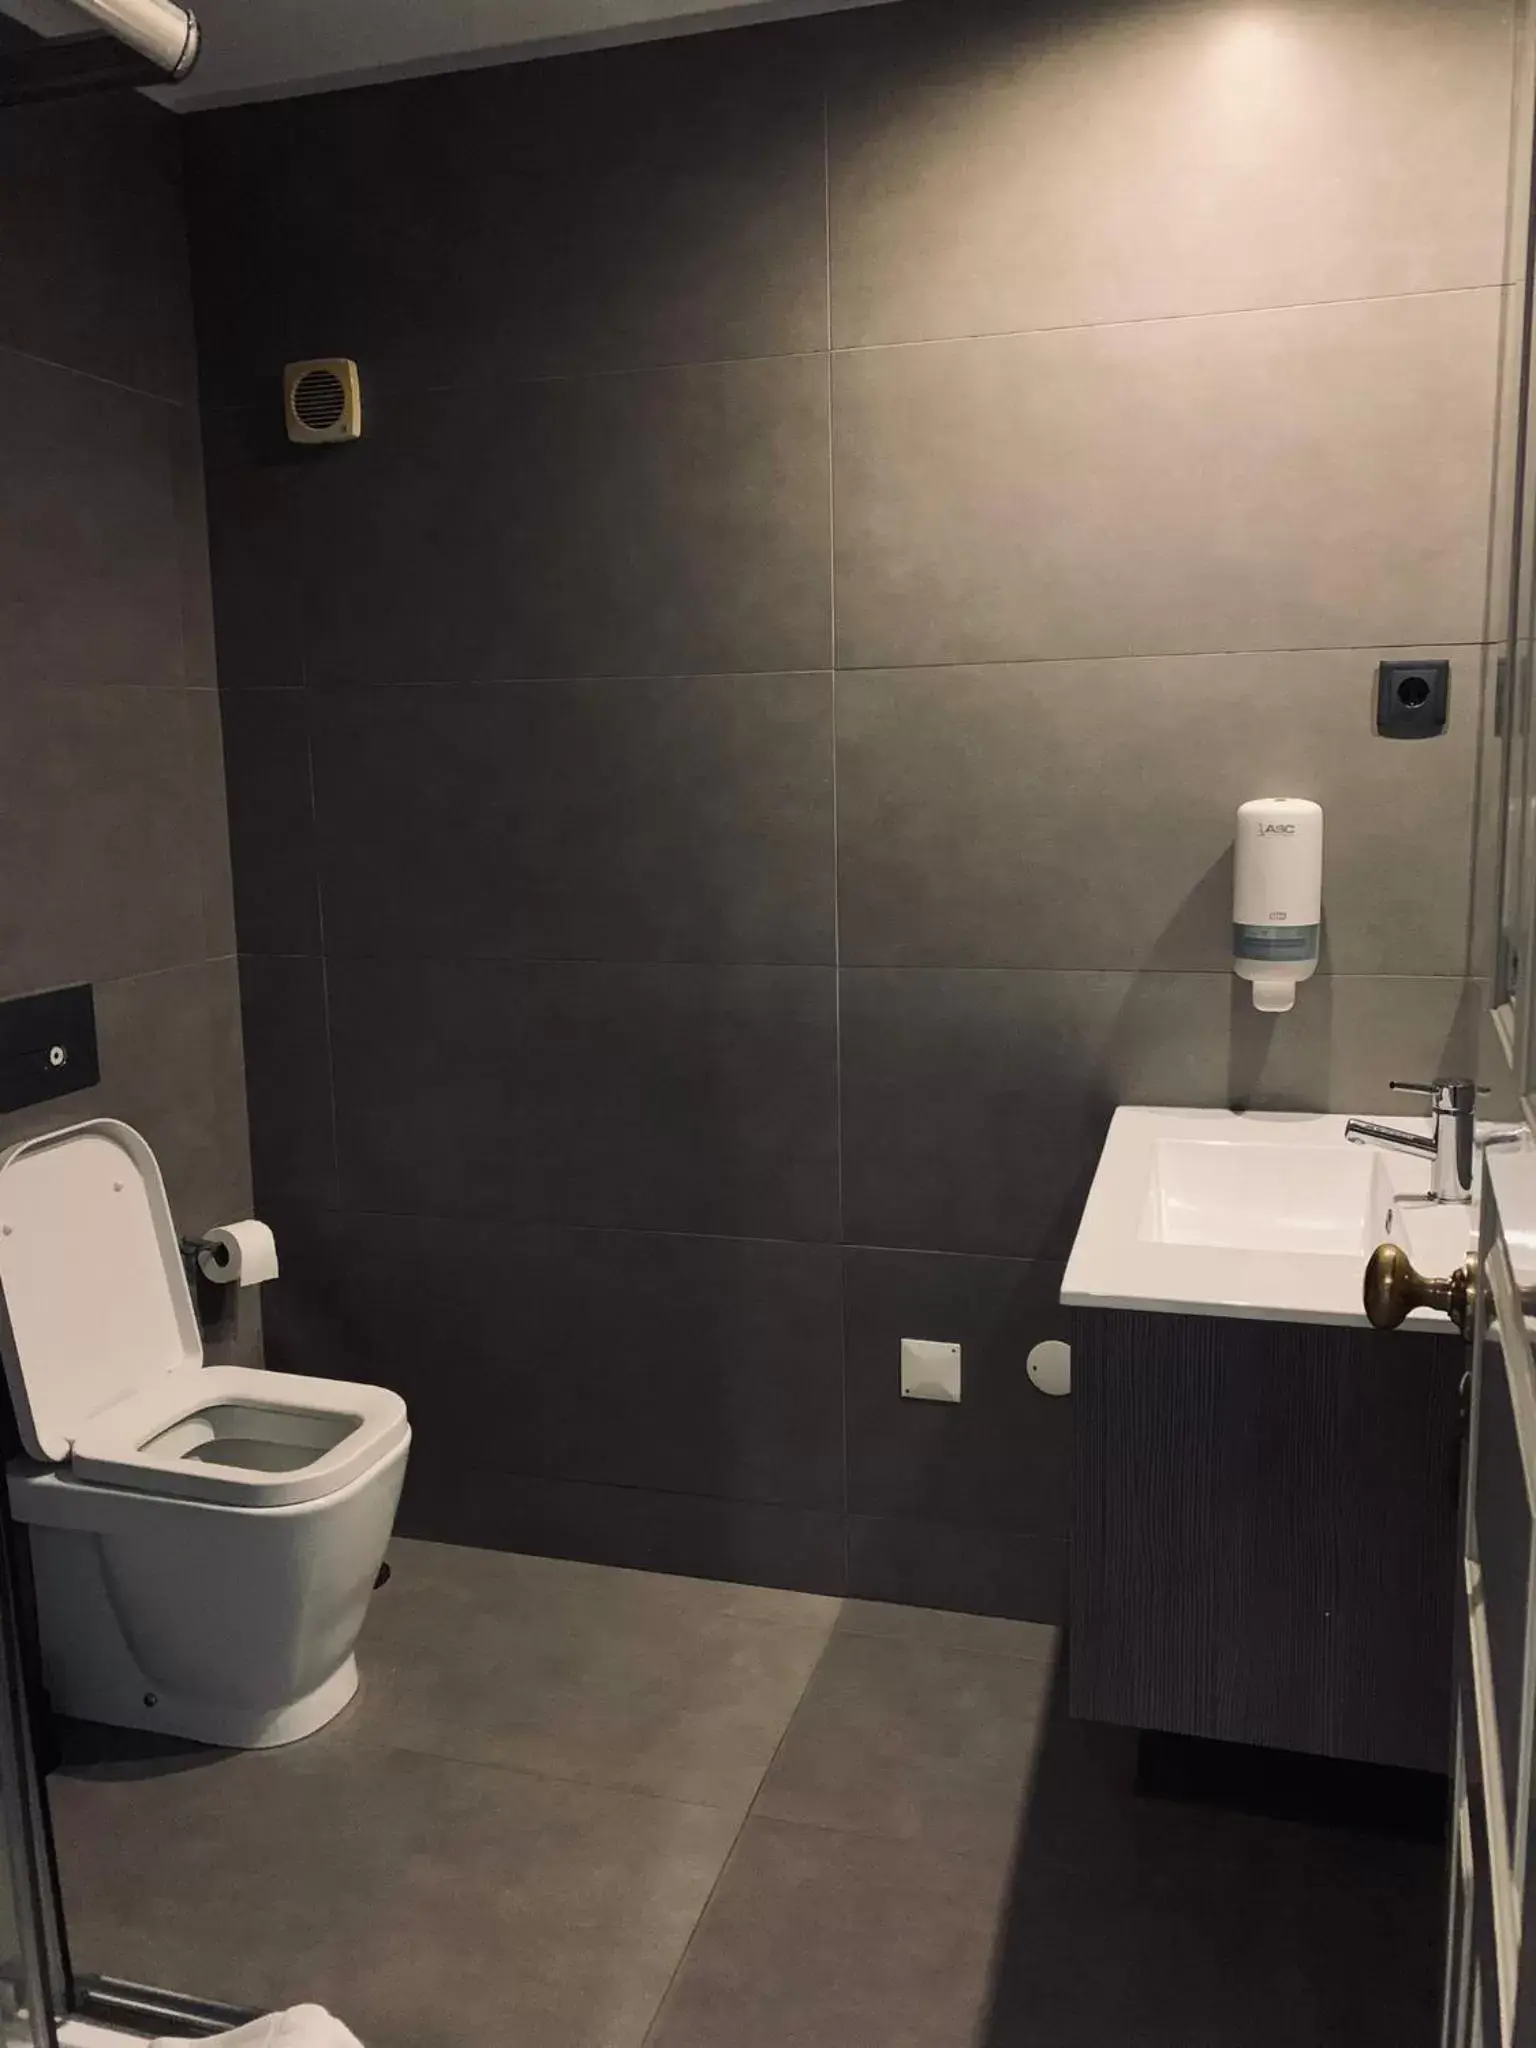 Bathroom in Hotel do Paço